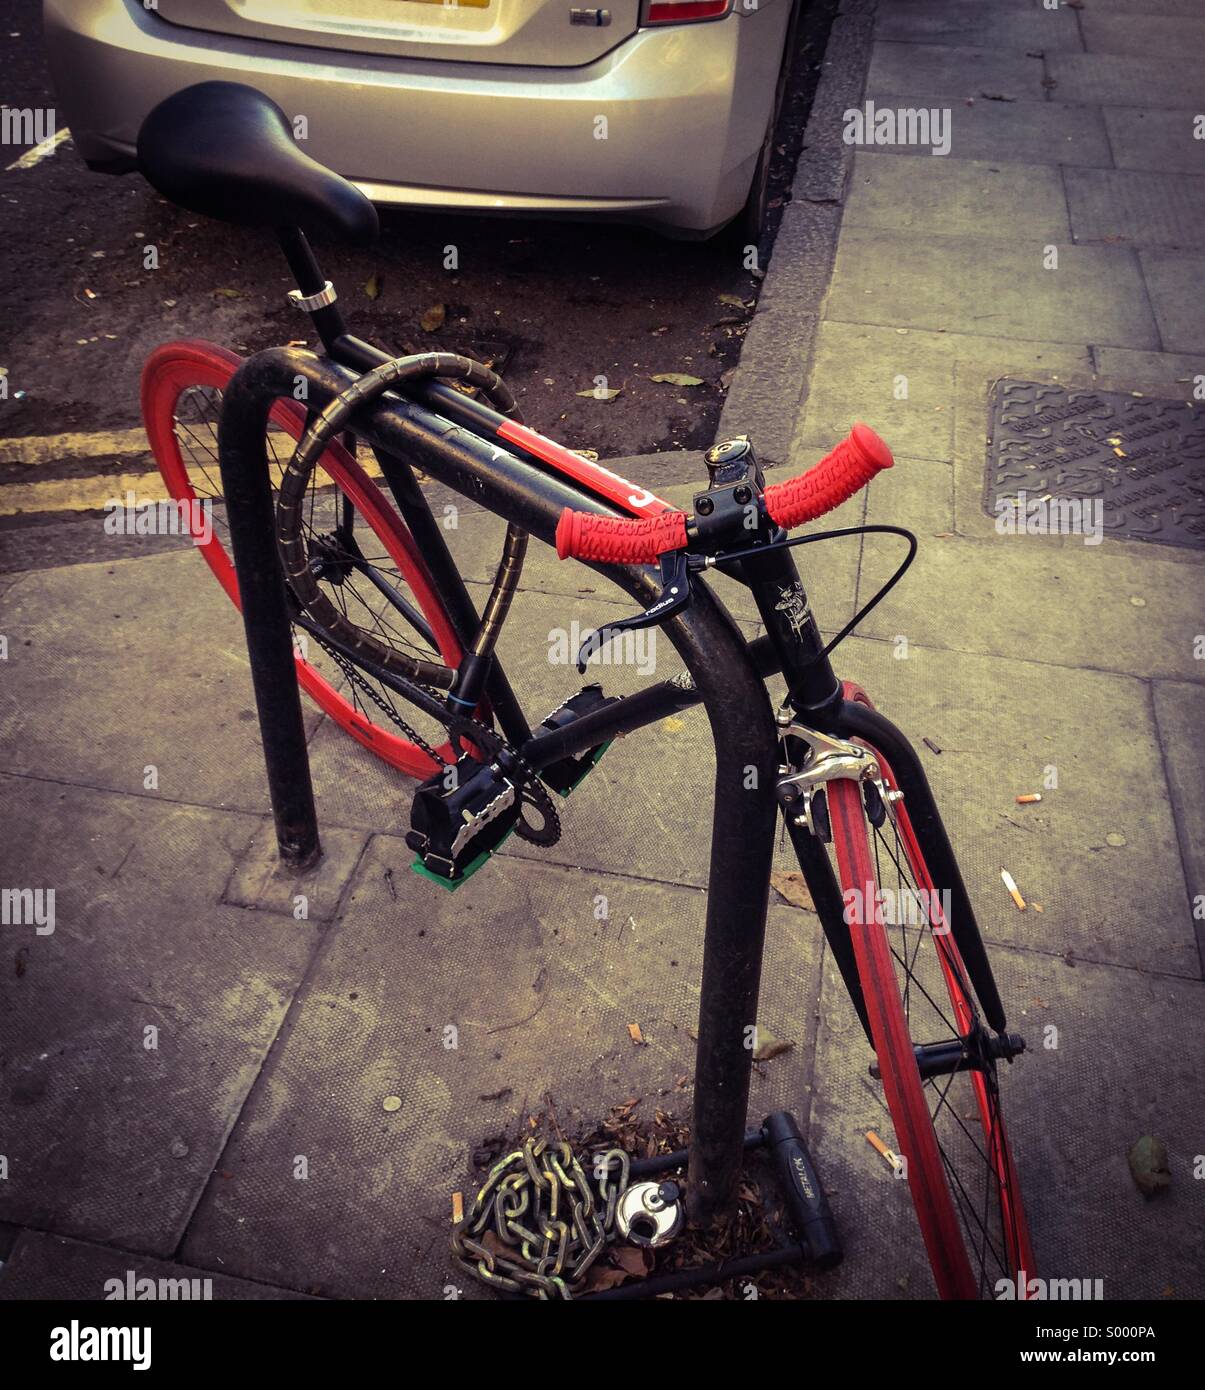 A 'fixie' bike locked up on a London Street Stock Photo